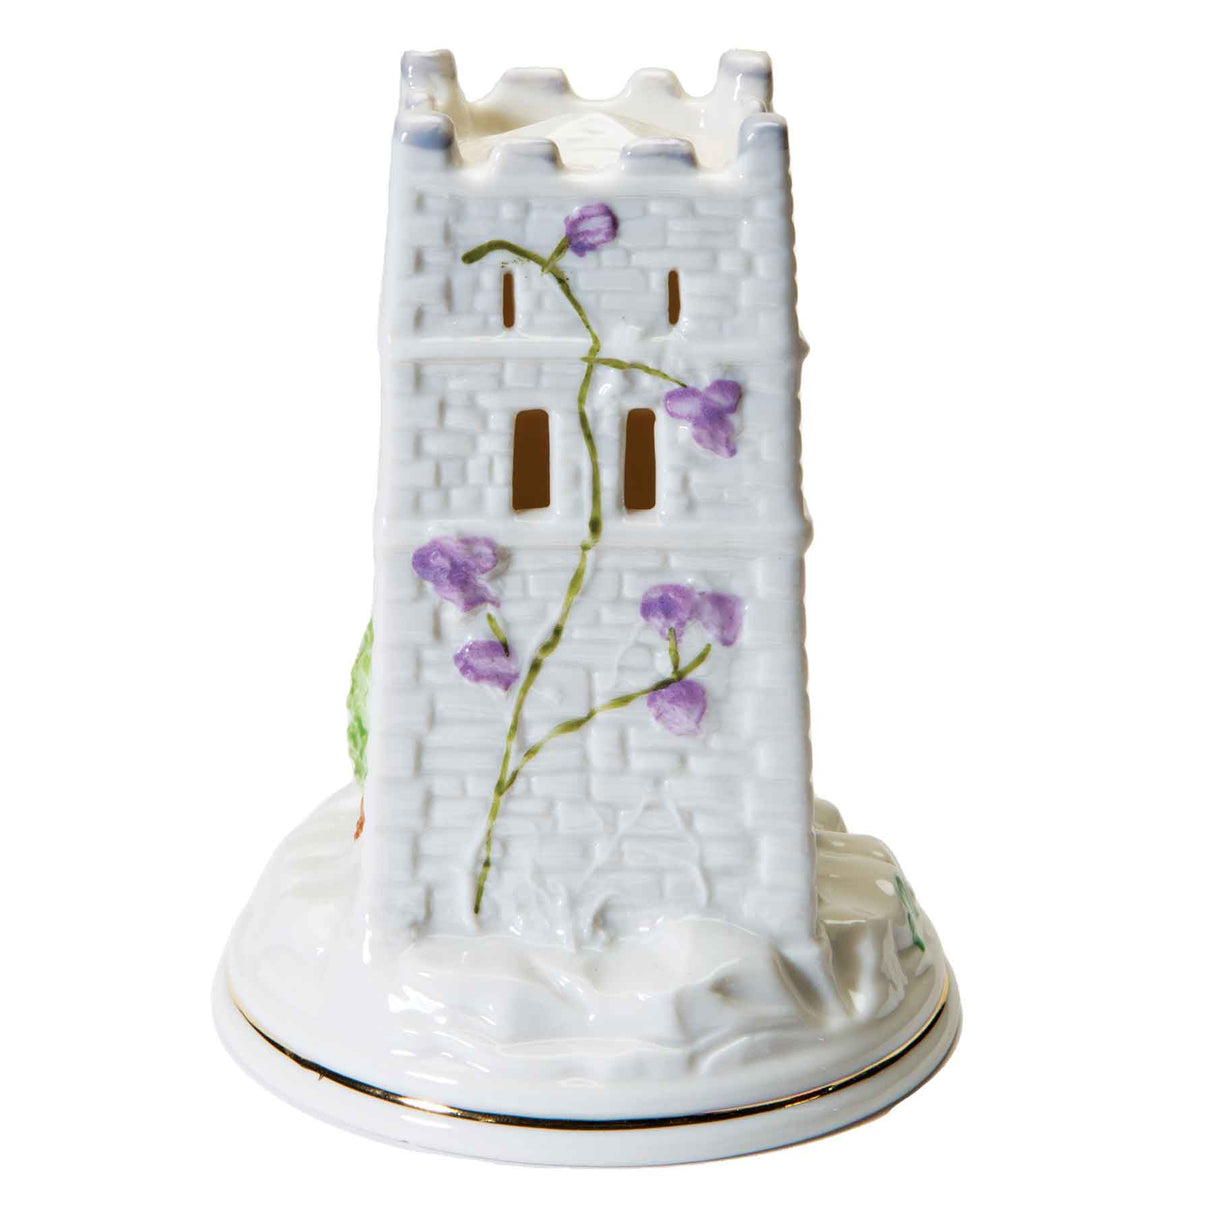 Belleek Monea Castle Lamp - Creative Irish Gifts